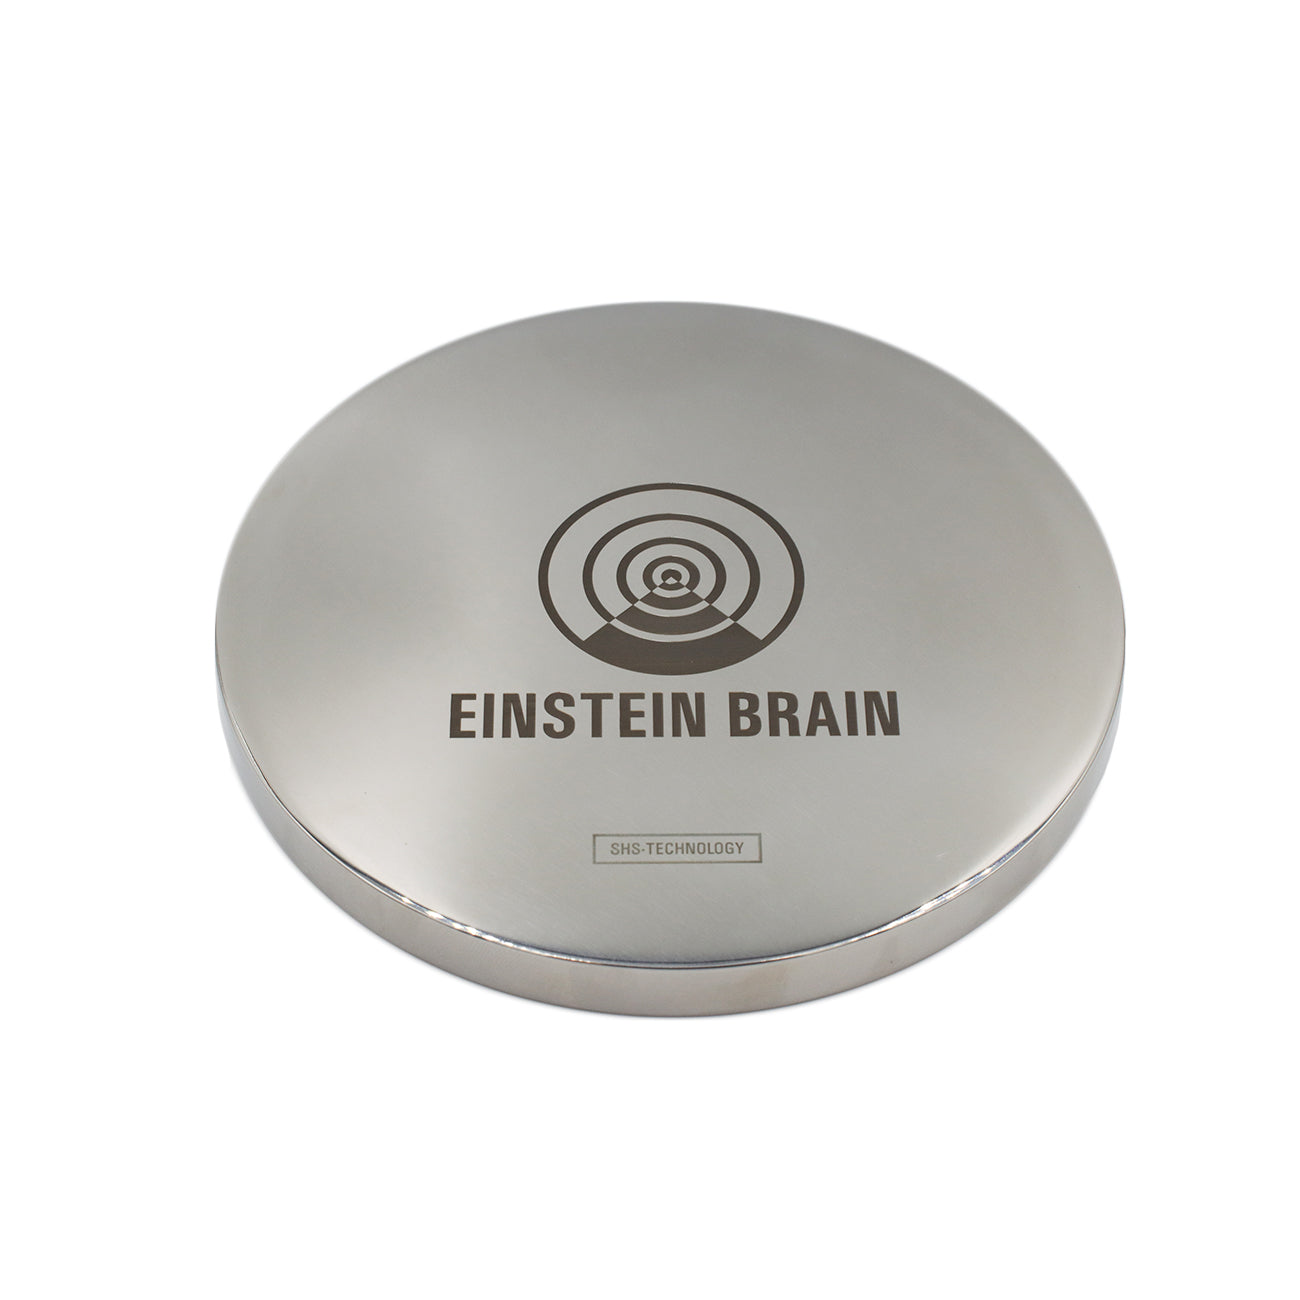 EMF Workstation Protection -  EMF Bed Protection - Einstein Brain Relax Chrome